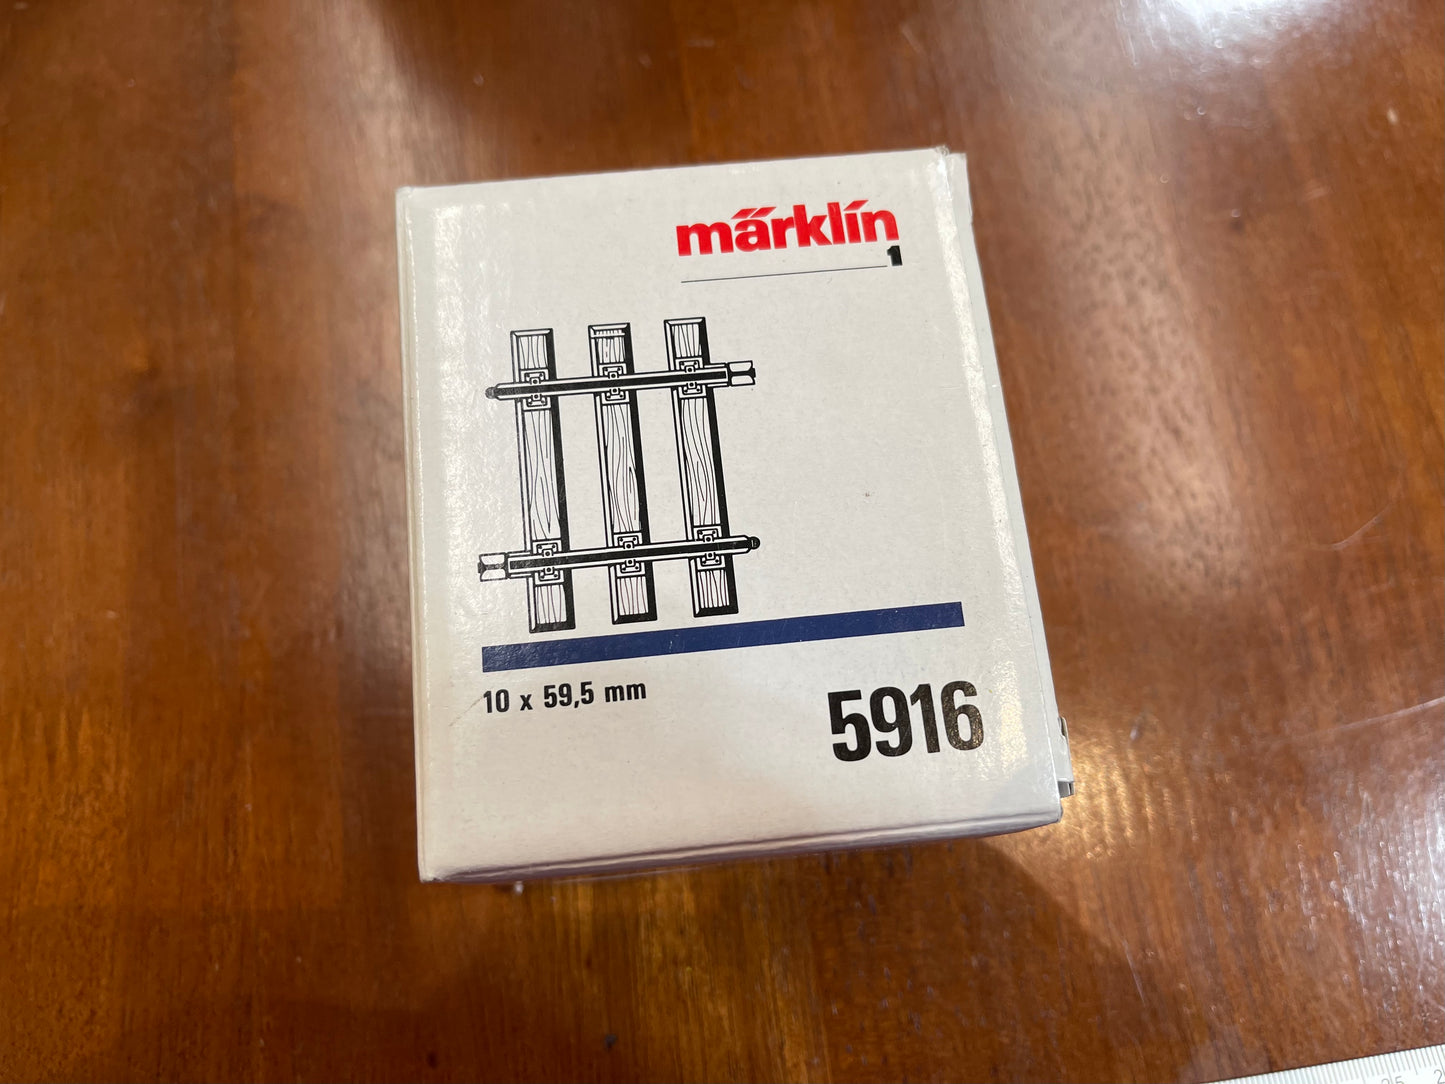 Marklin 5916 - Straight Track 59.5 mm